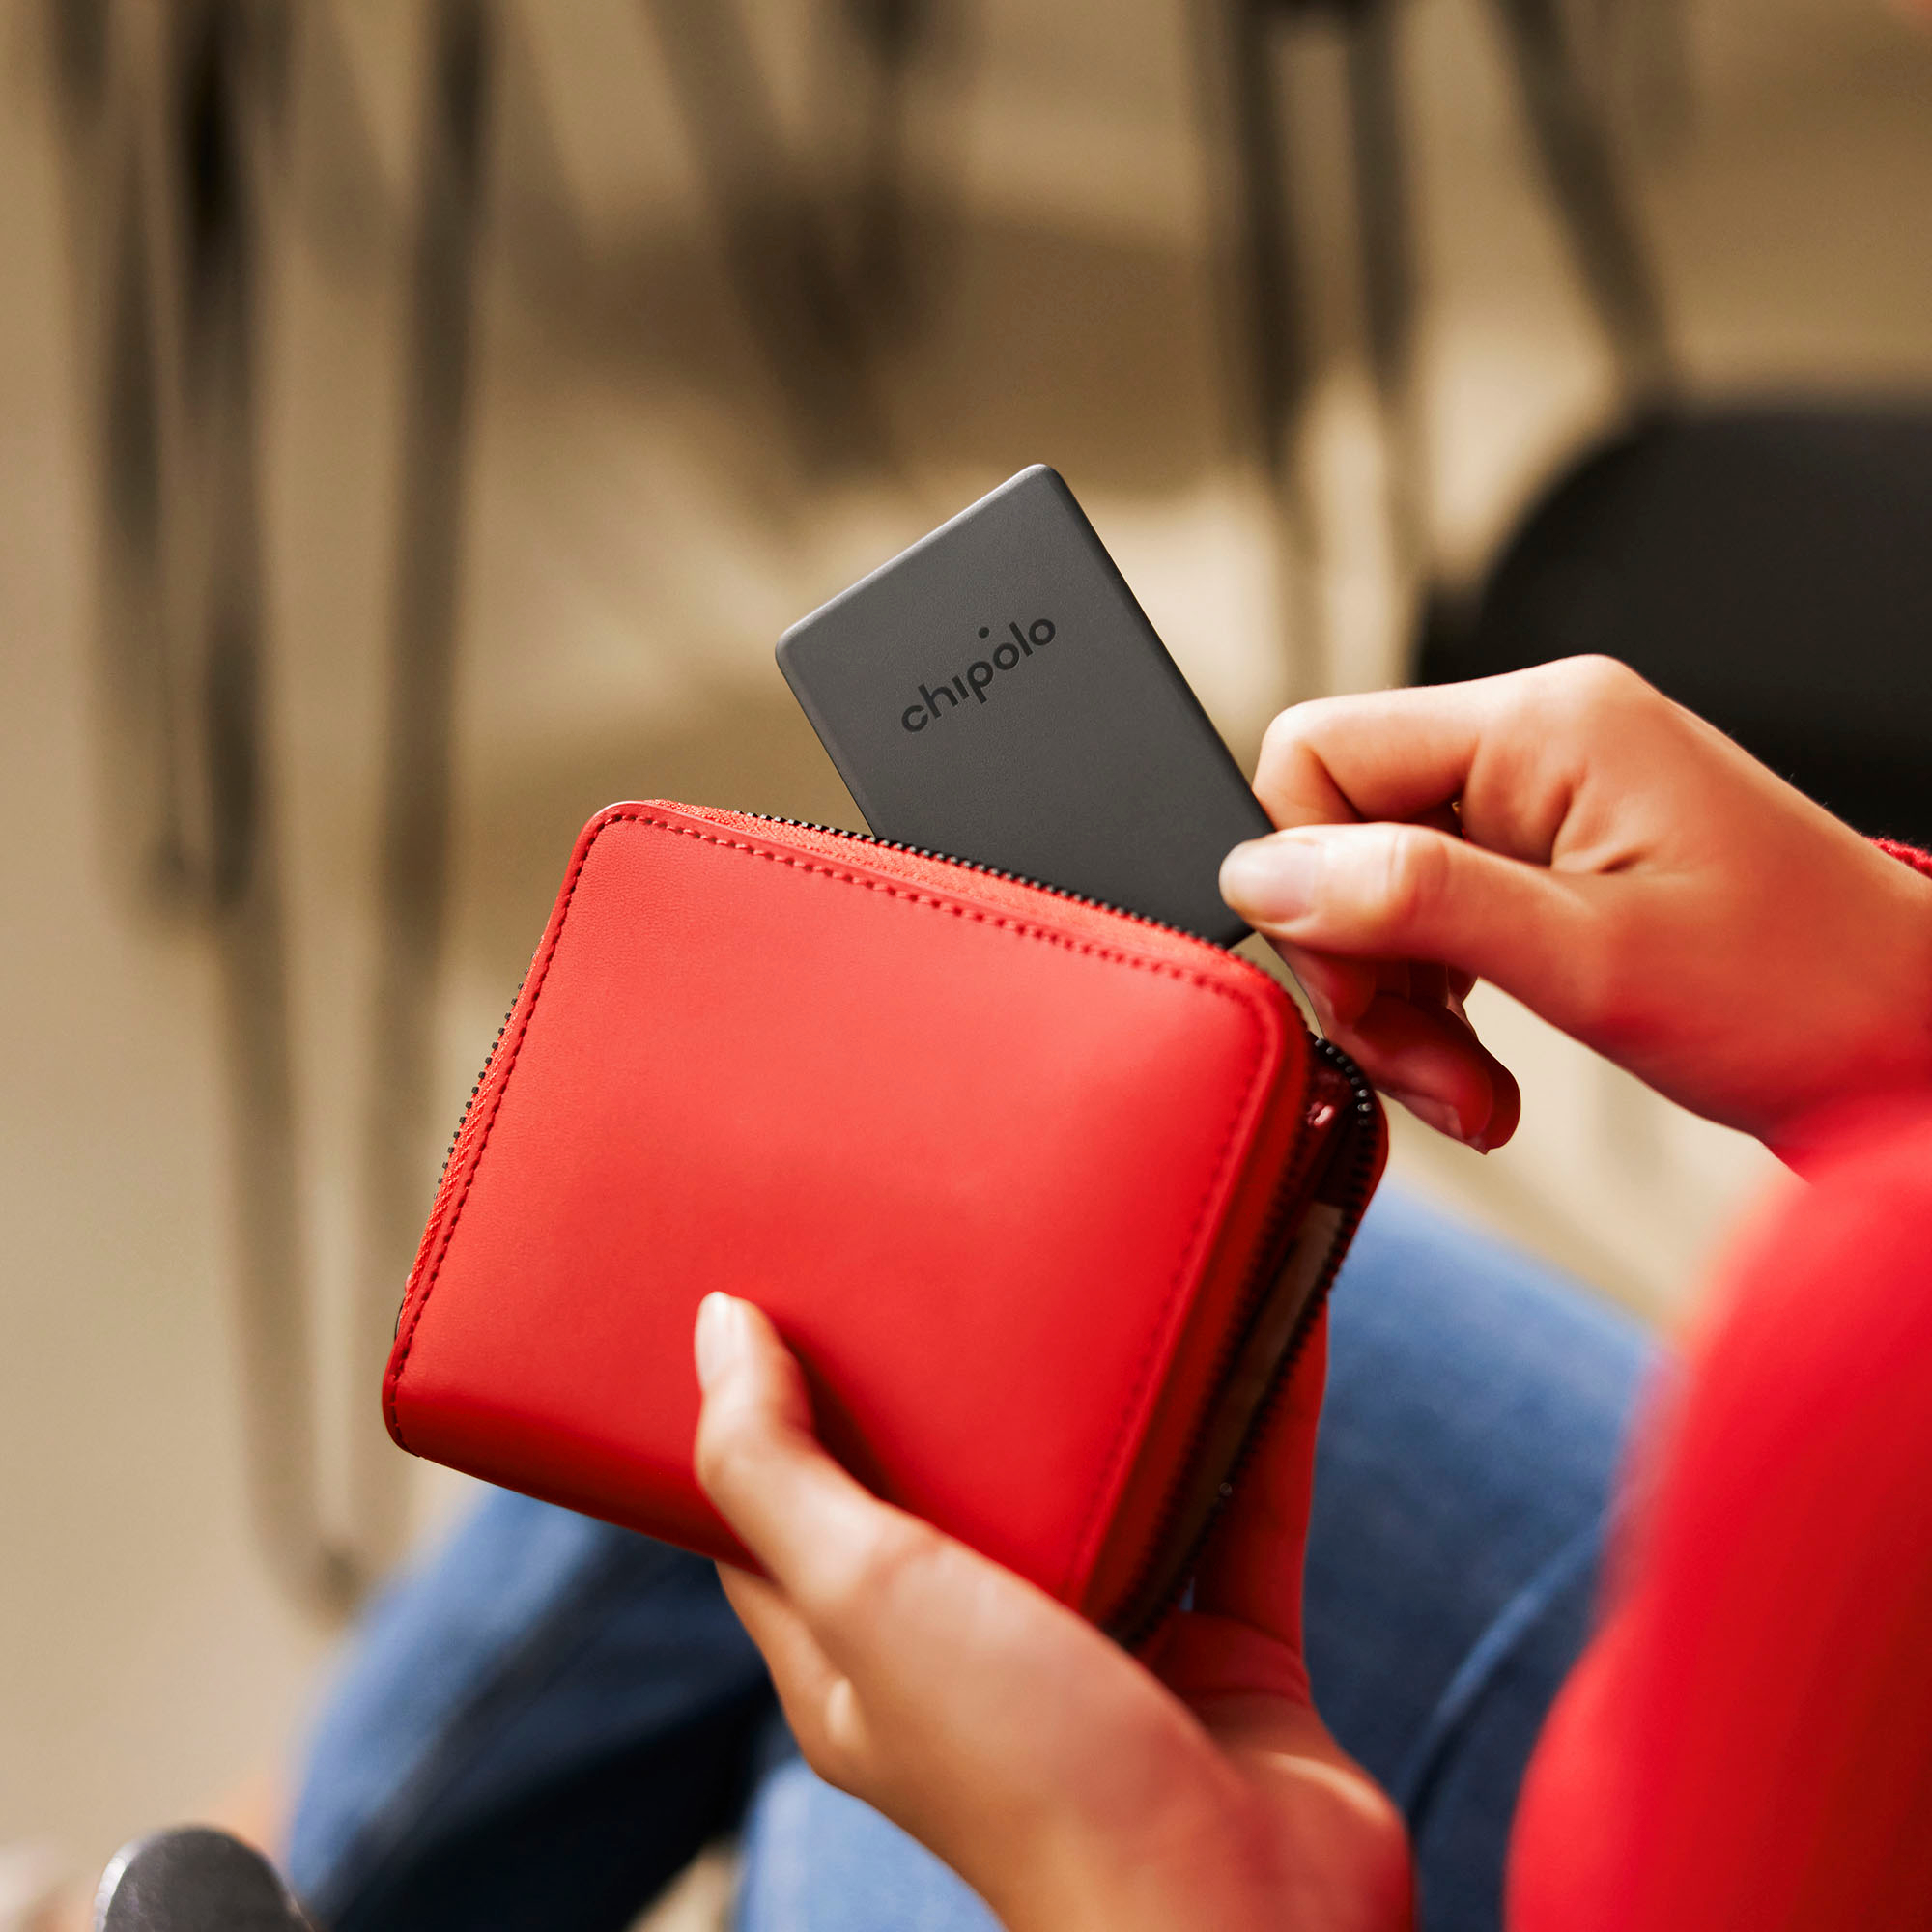 Chipolo CARD Spot Bluetooth Wallet Tracker - Black Reviews